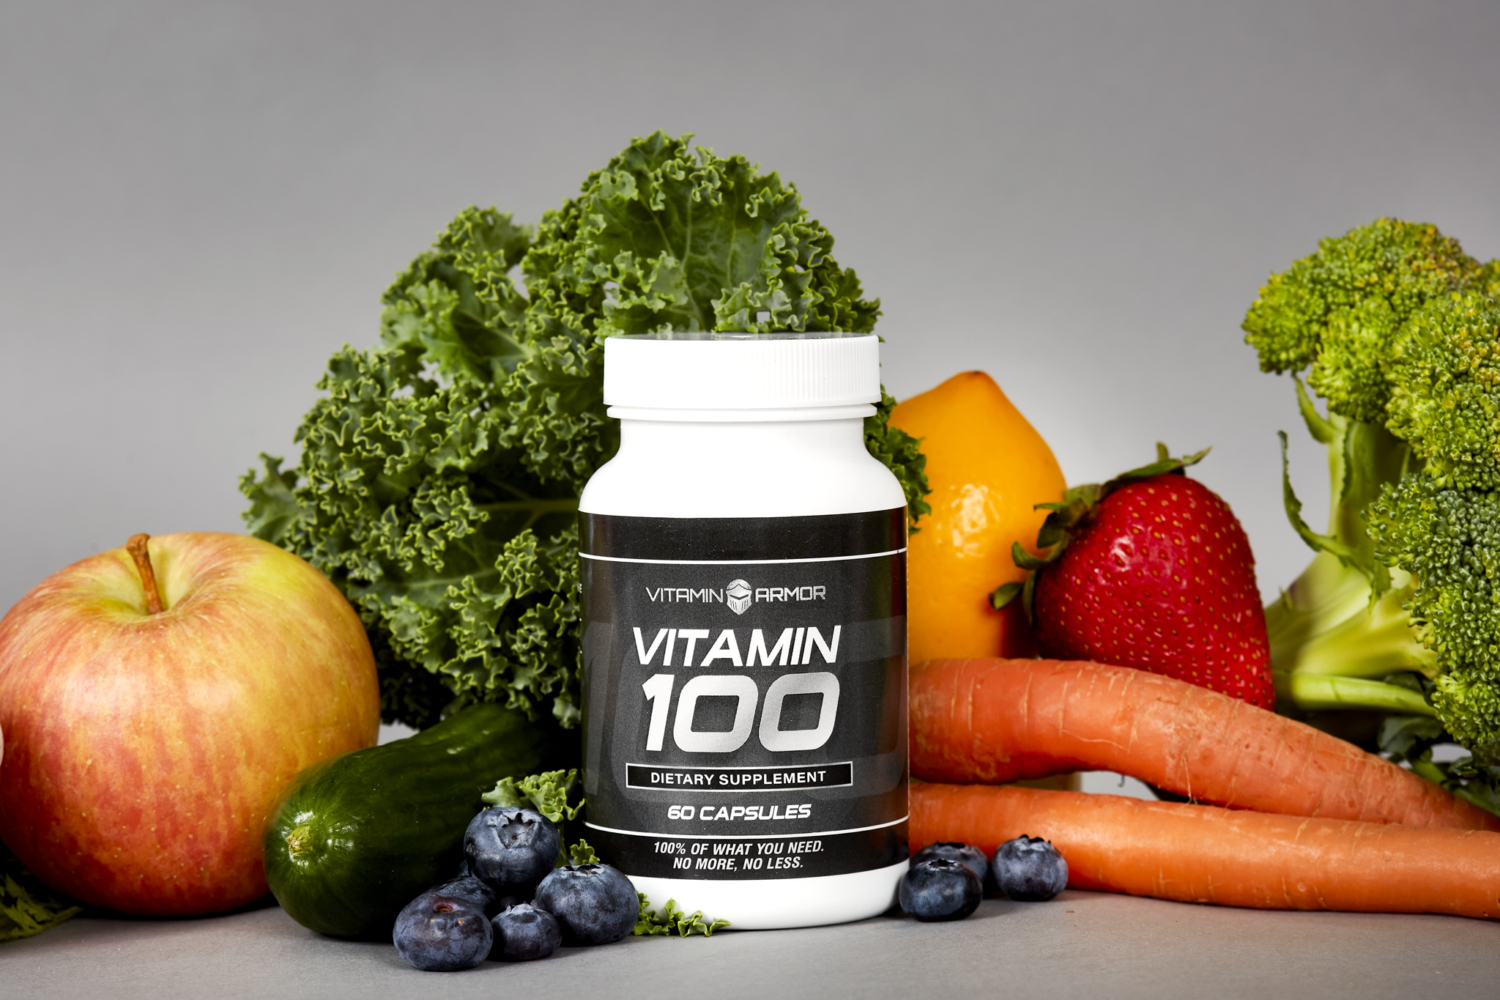 Vitamin 100 from Vitamin Armor